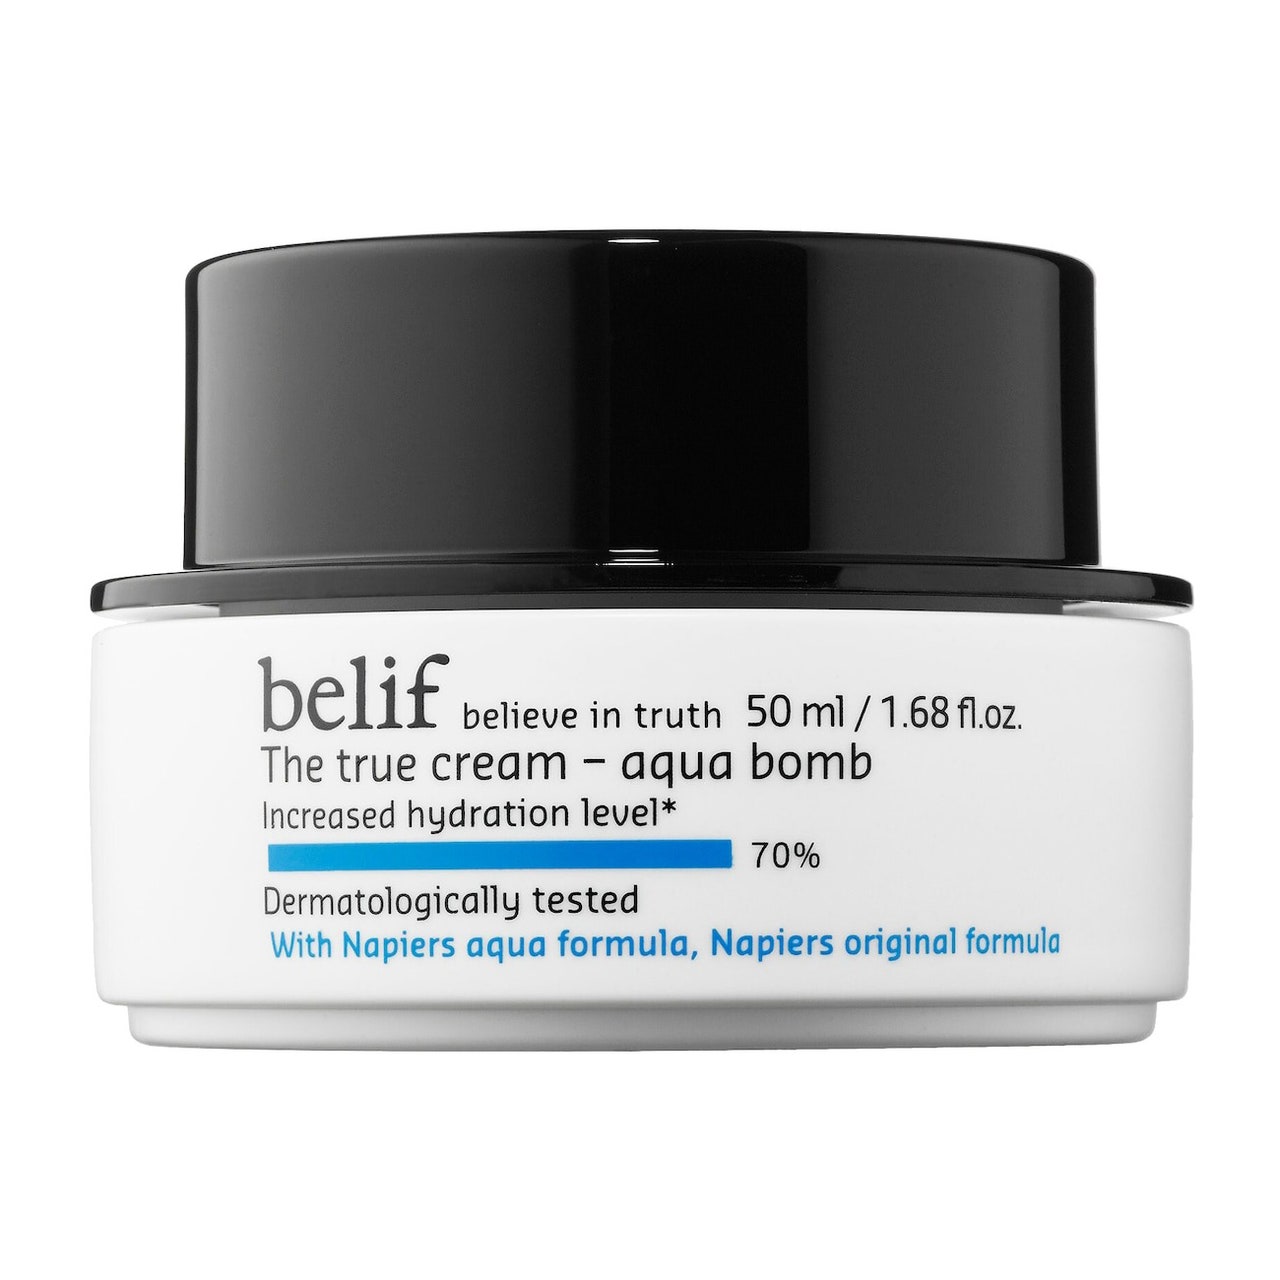 Belif The True Cream Aqua Bomb white jar with black lid on white background